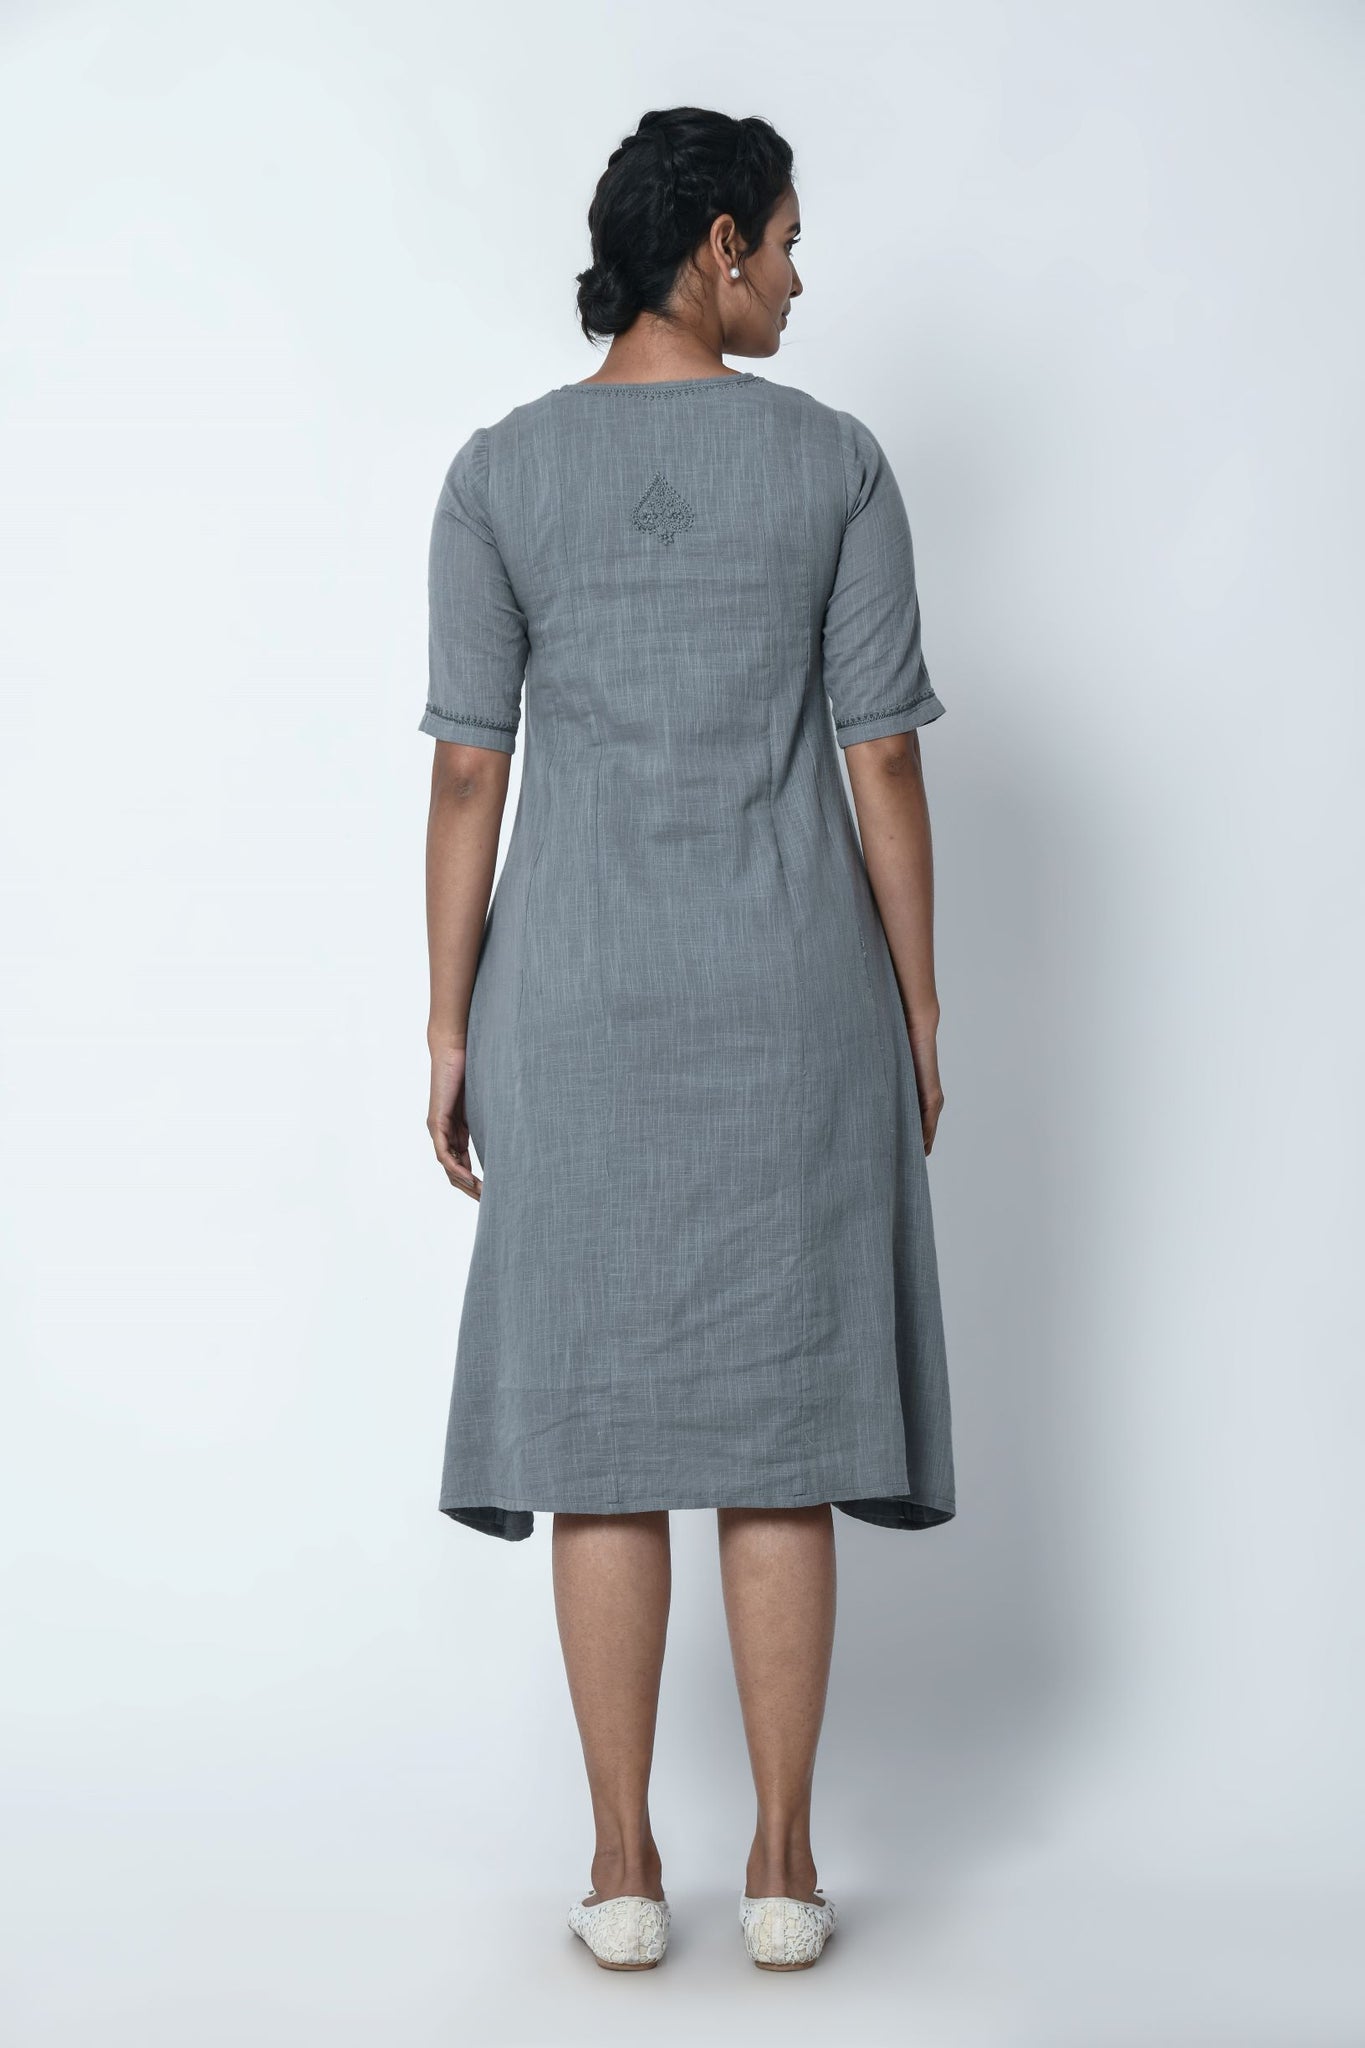 Phagun Lava Grey Panel Dress